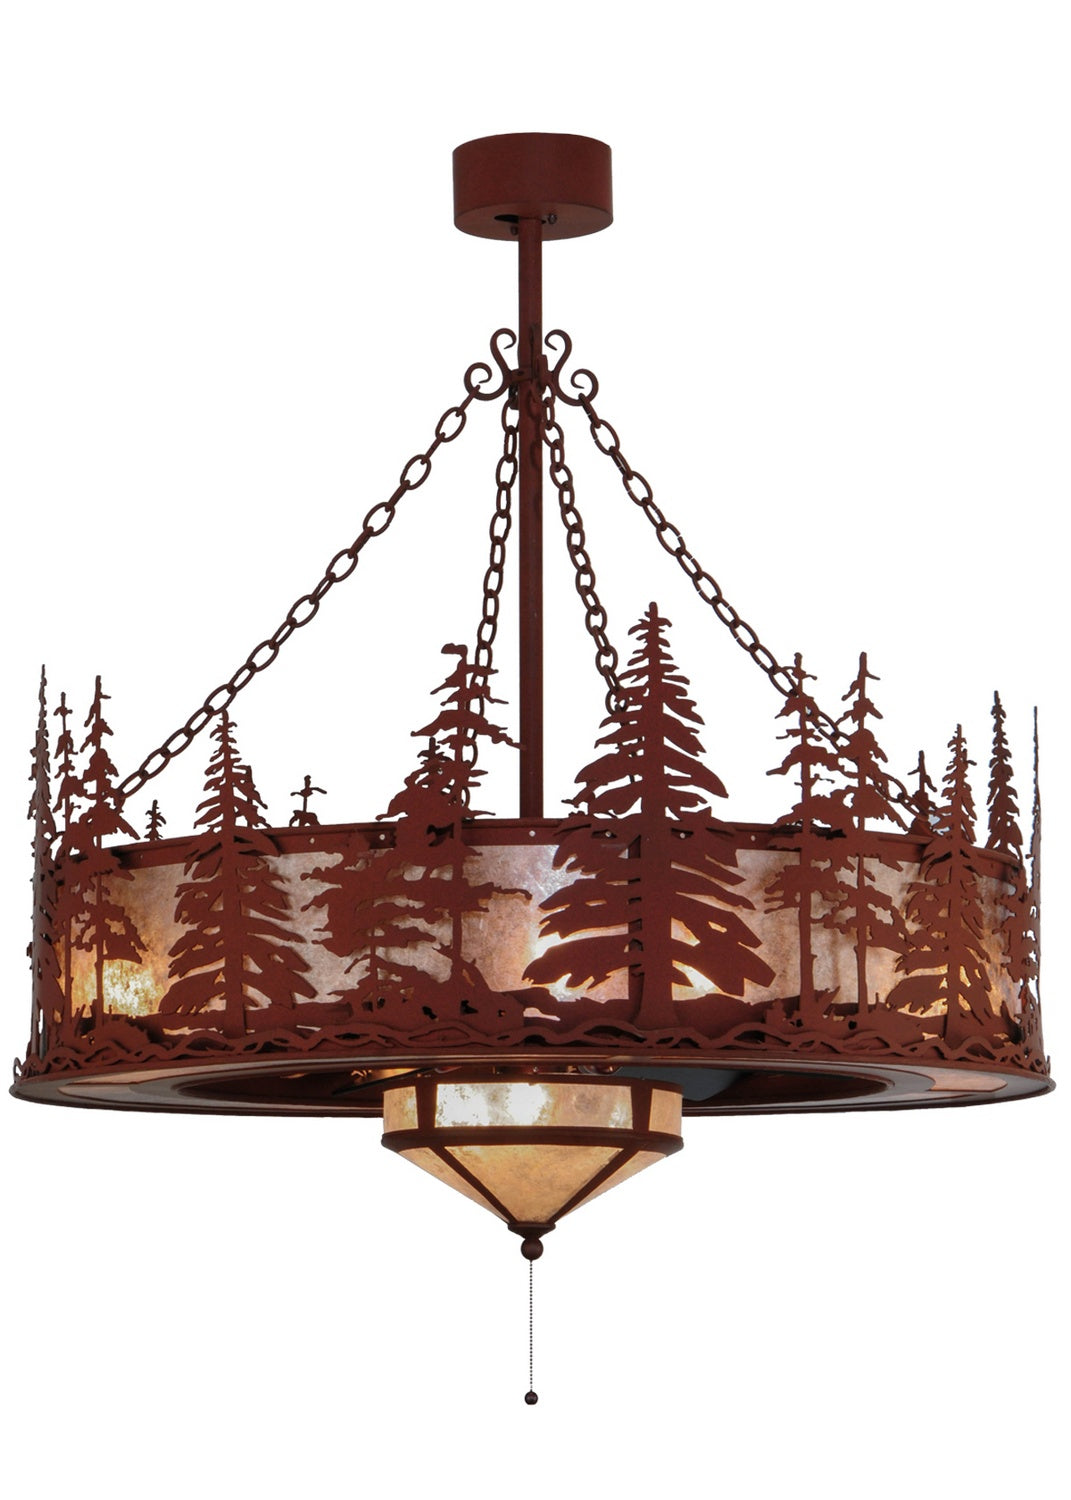 Meyda Tiffany Tall Pines 144121 Ceiling Fan - Red Rust